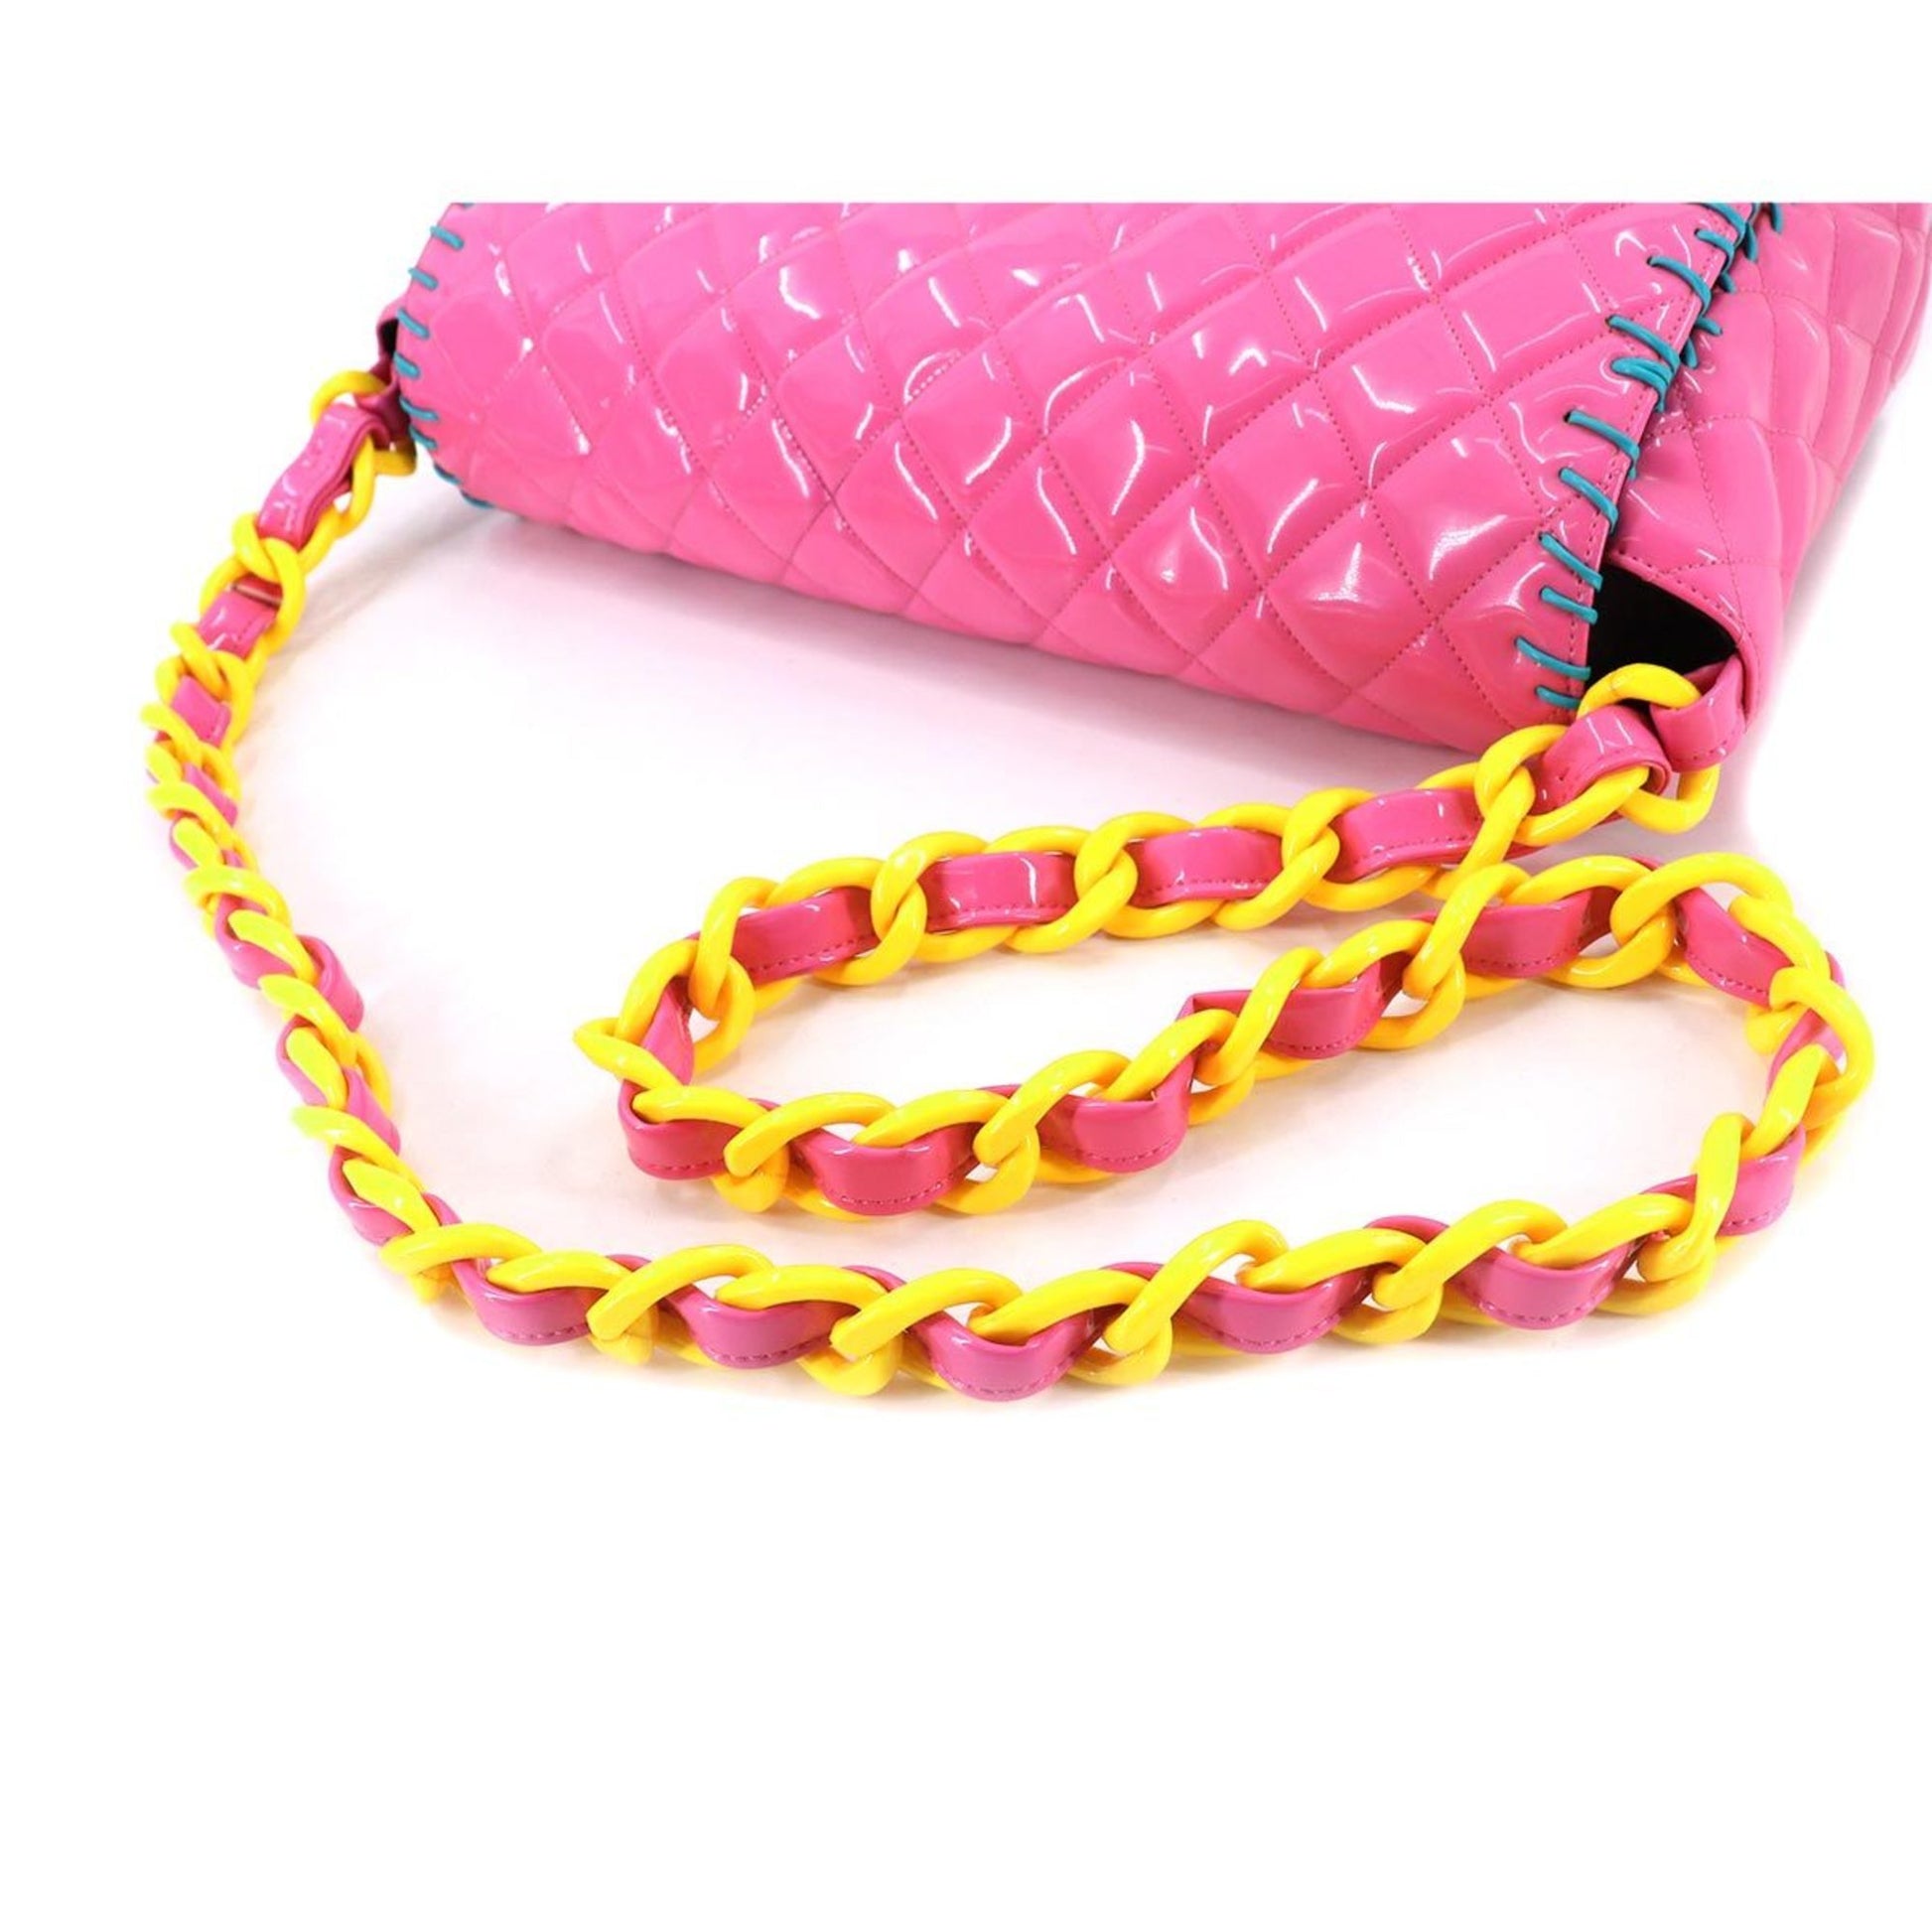 CHANEL Matelasse Plastic Chain Shoulder Bag Enamel Yellow Purse 90195749